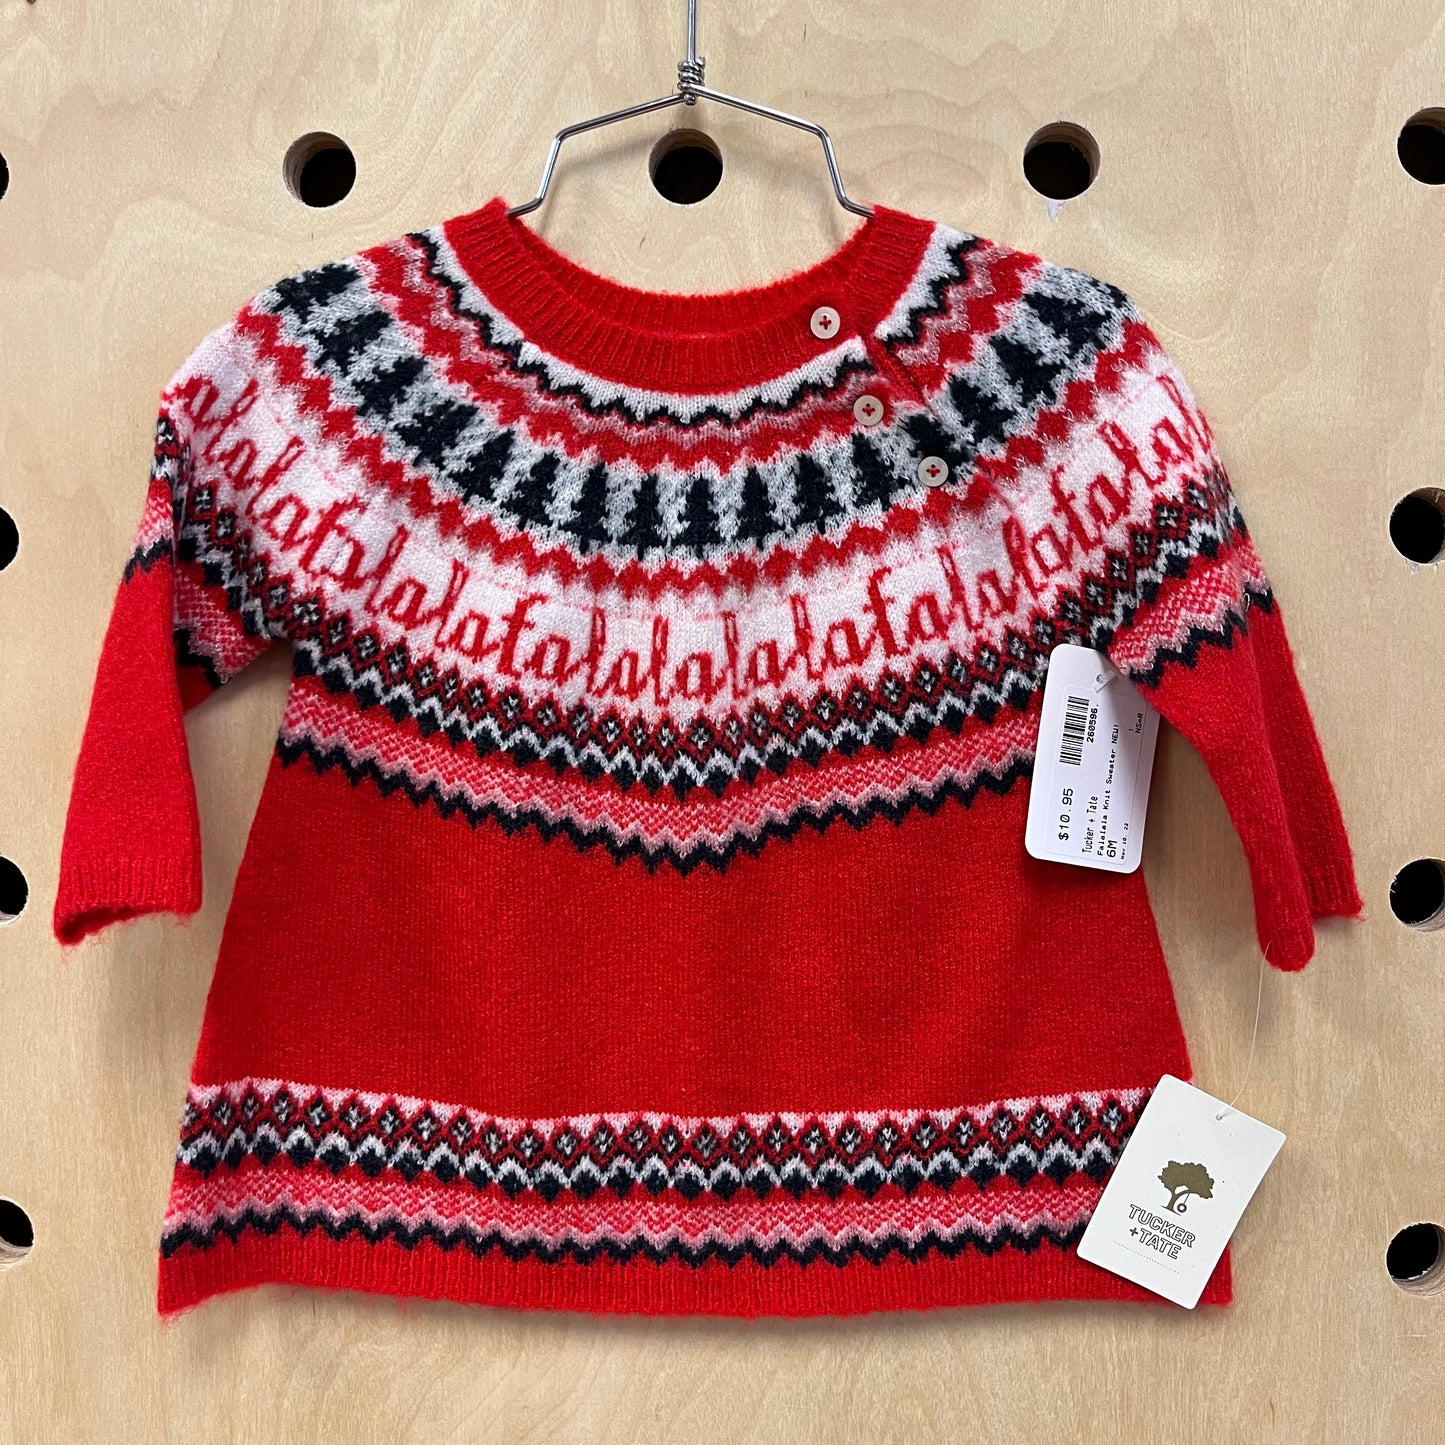 Falalala Knit Sweater NEW!